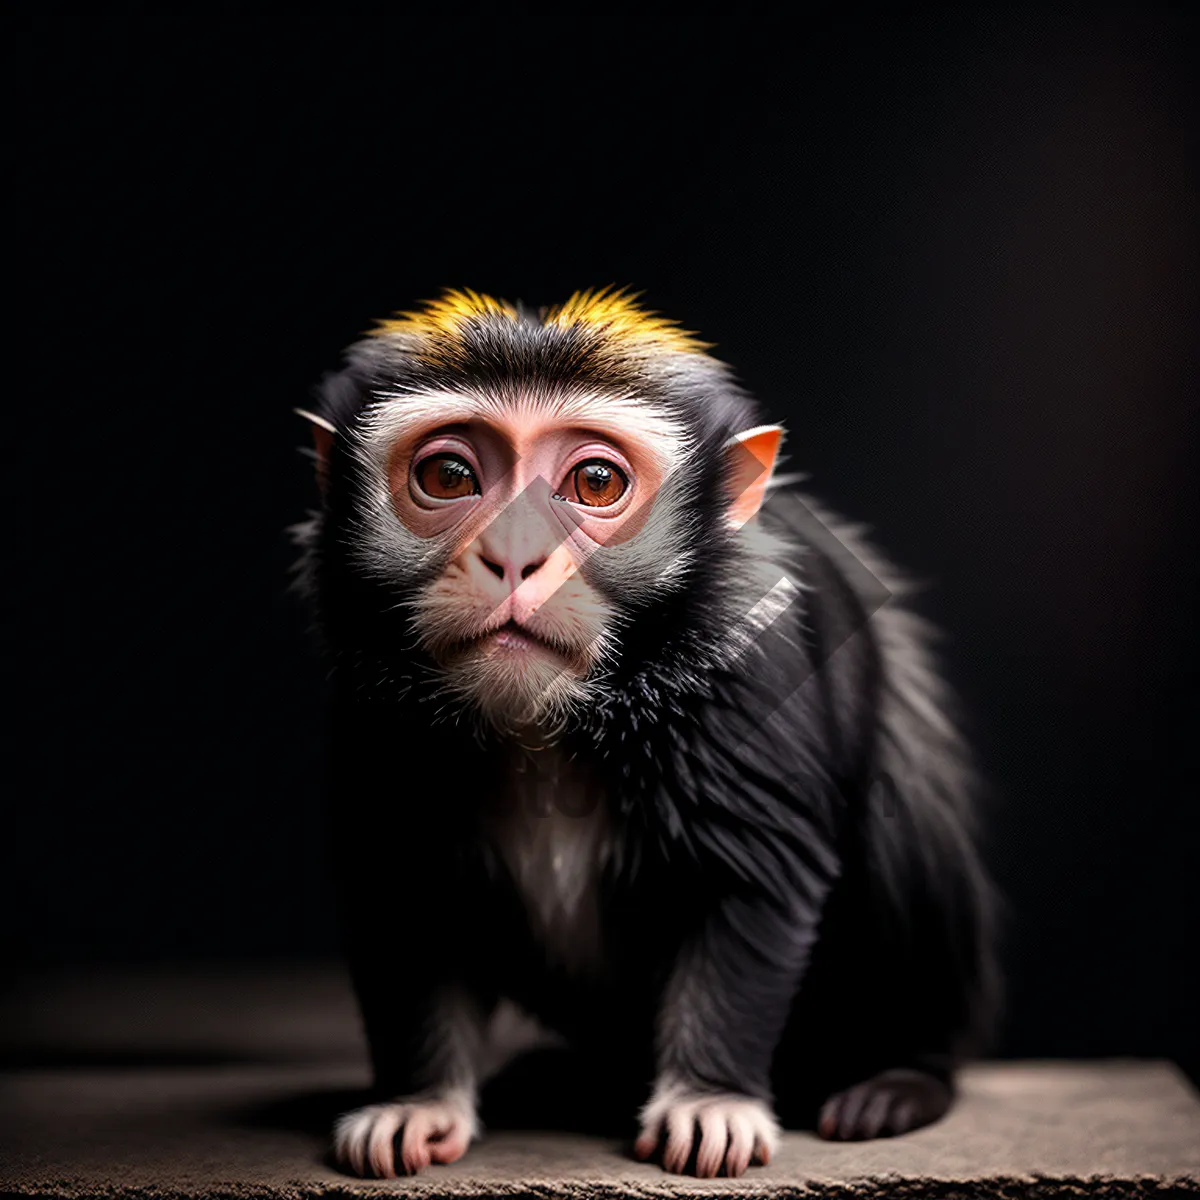 Picture of Adorable Baby Primate in Wildlife Habitat